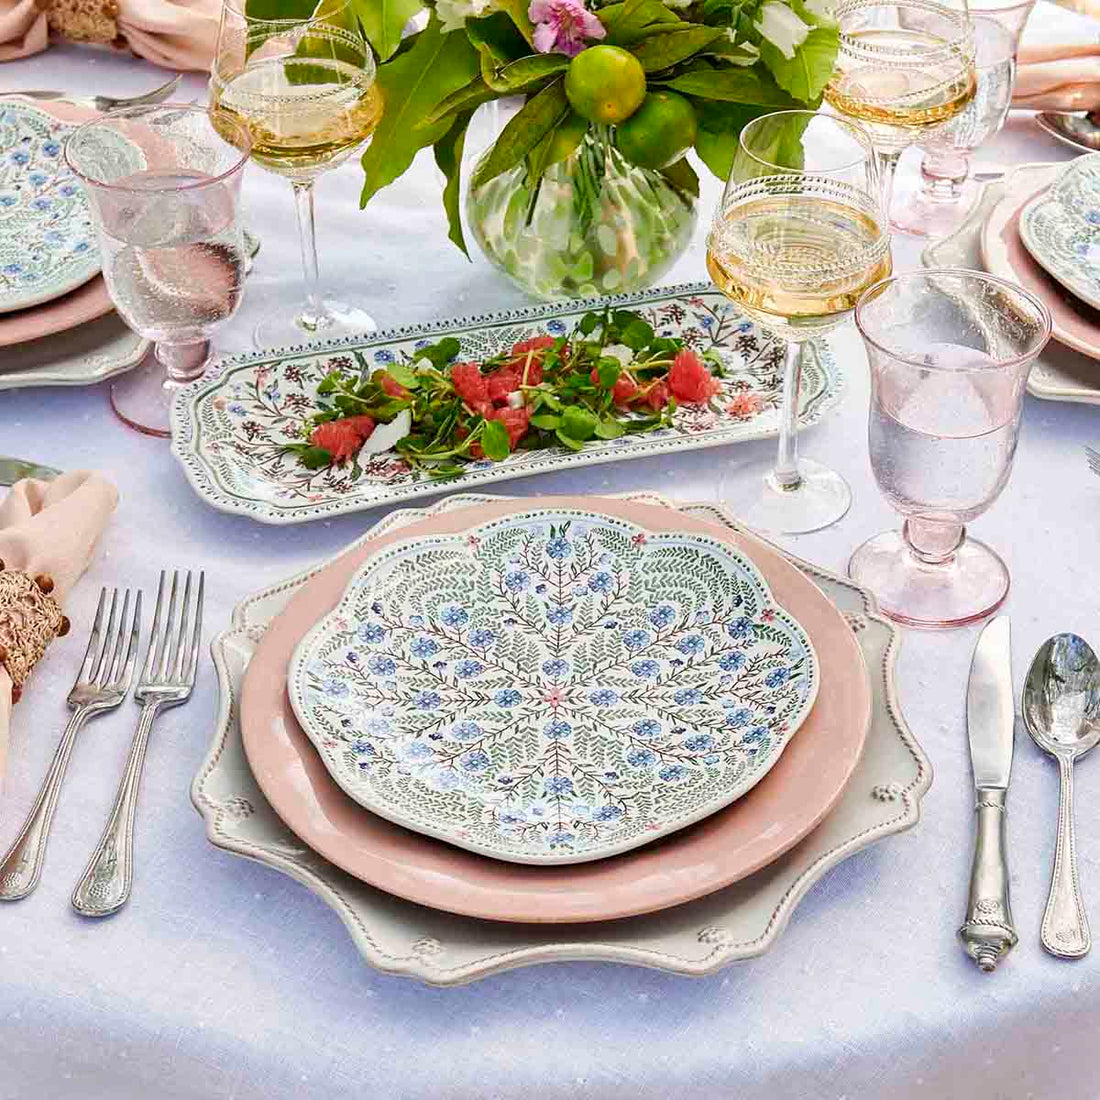 An elegantly set dining table with Juliska Villa Seville dinner plates, silverware, and glasses of wine.